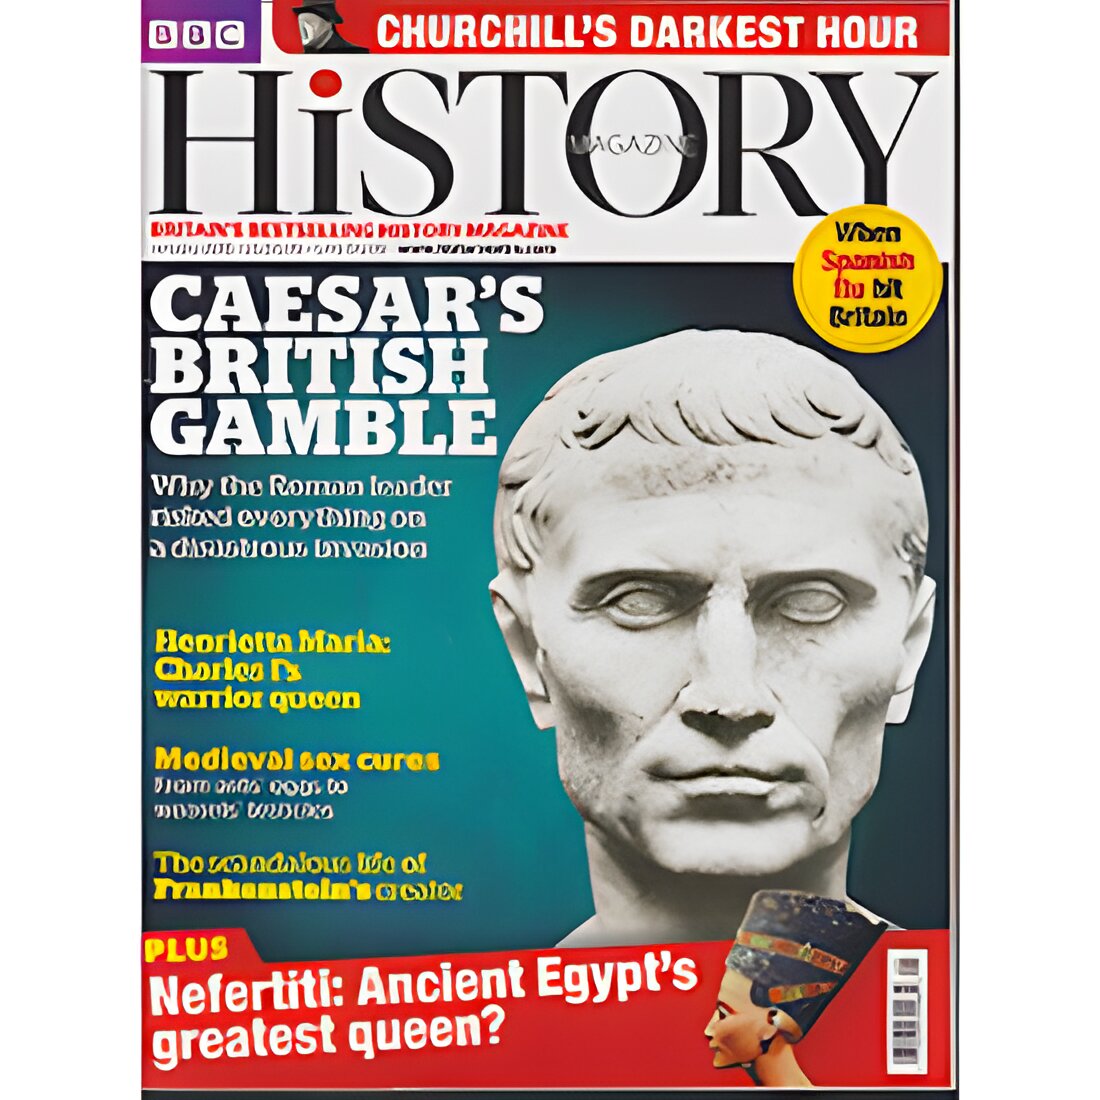 Free Copy Of BBC History Magazine